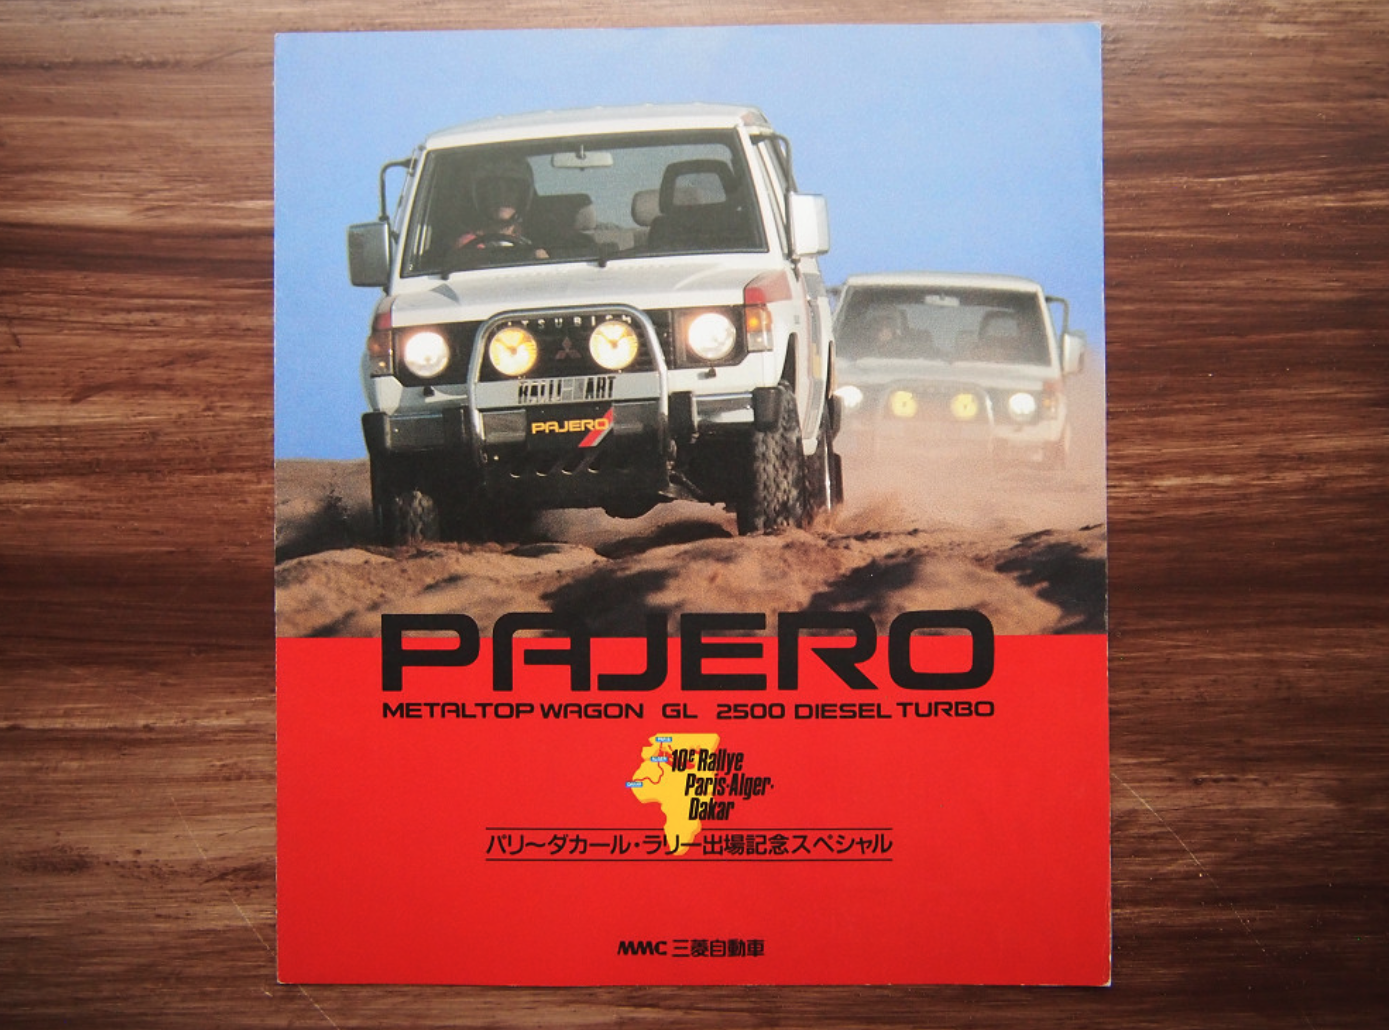 The 1988 Paris Dakar Edition Pajero brochures